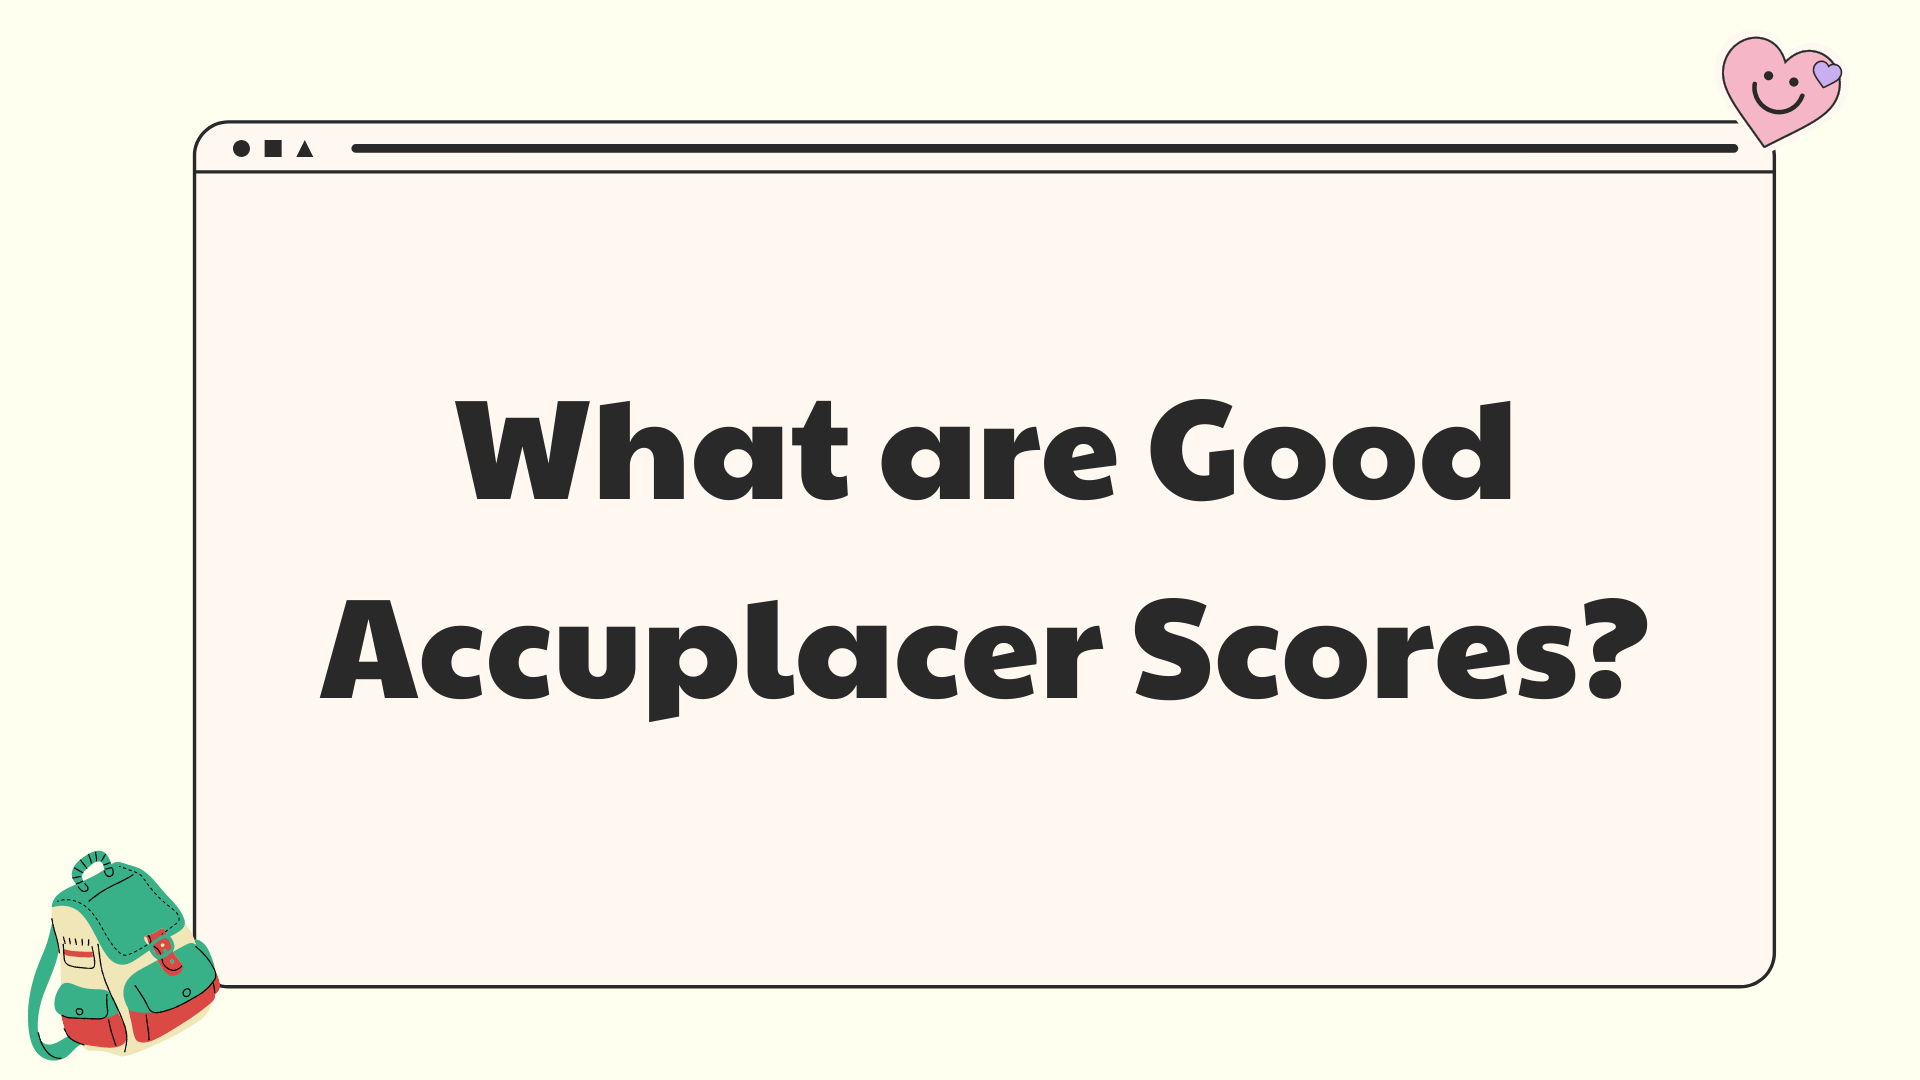 Accuplacer scores